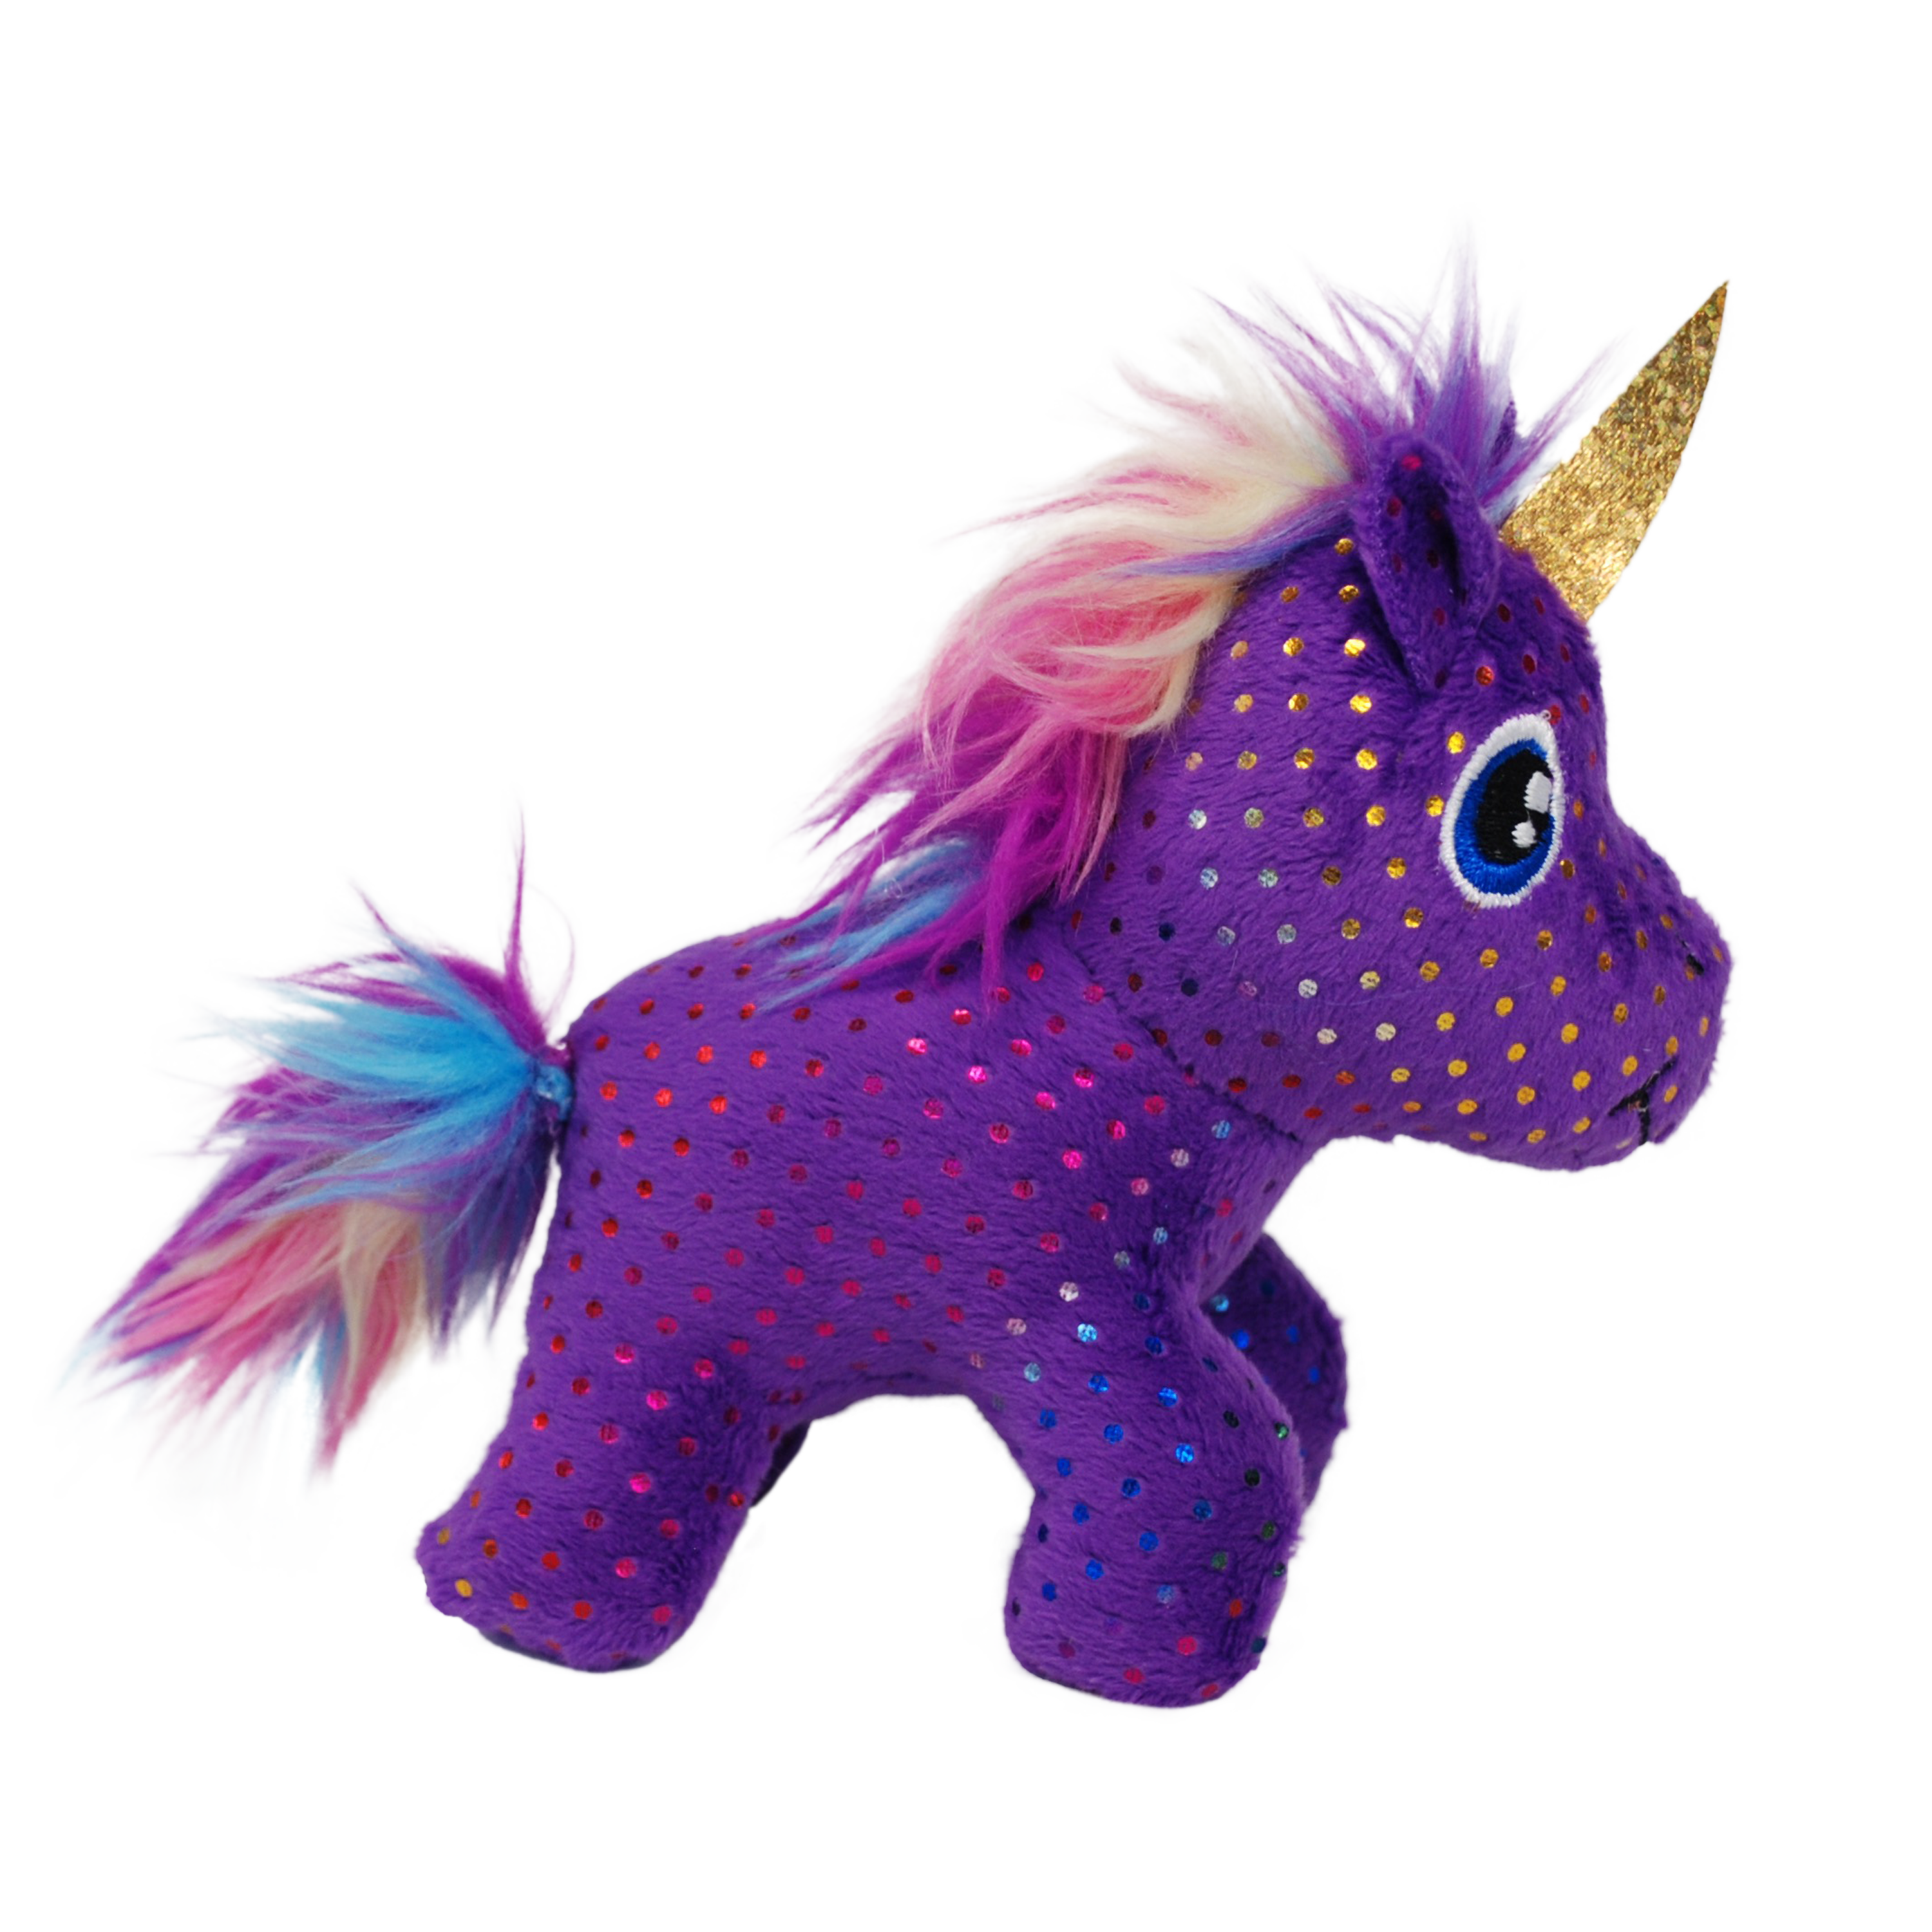 Enchanted Buzzy Unicorn offpack product image